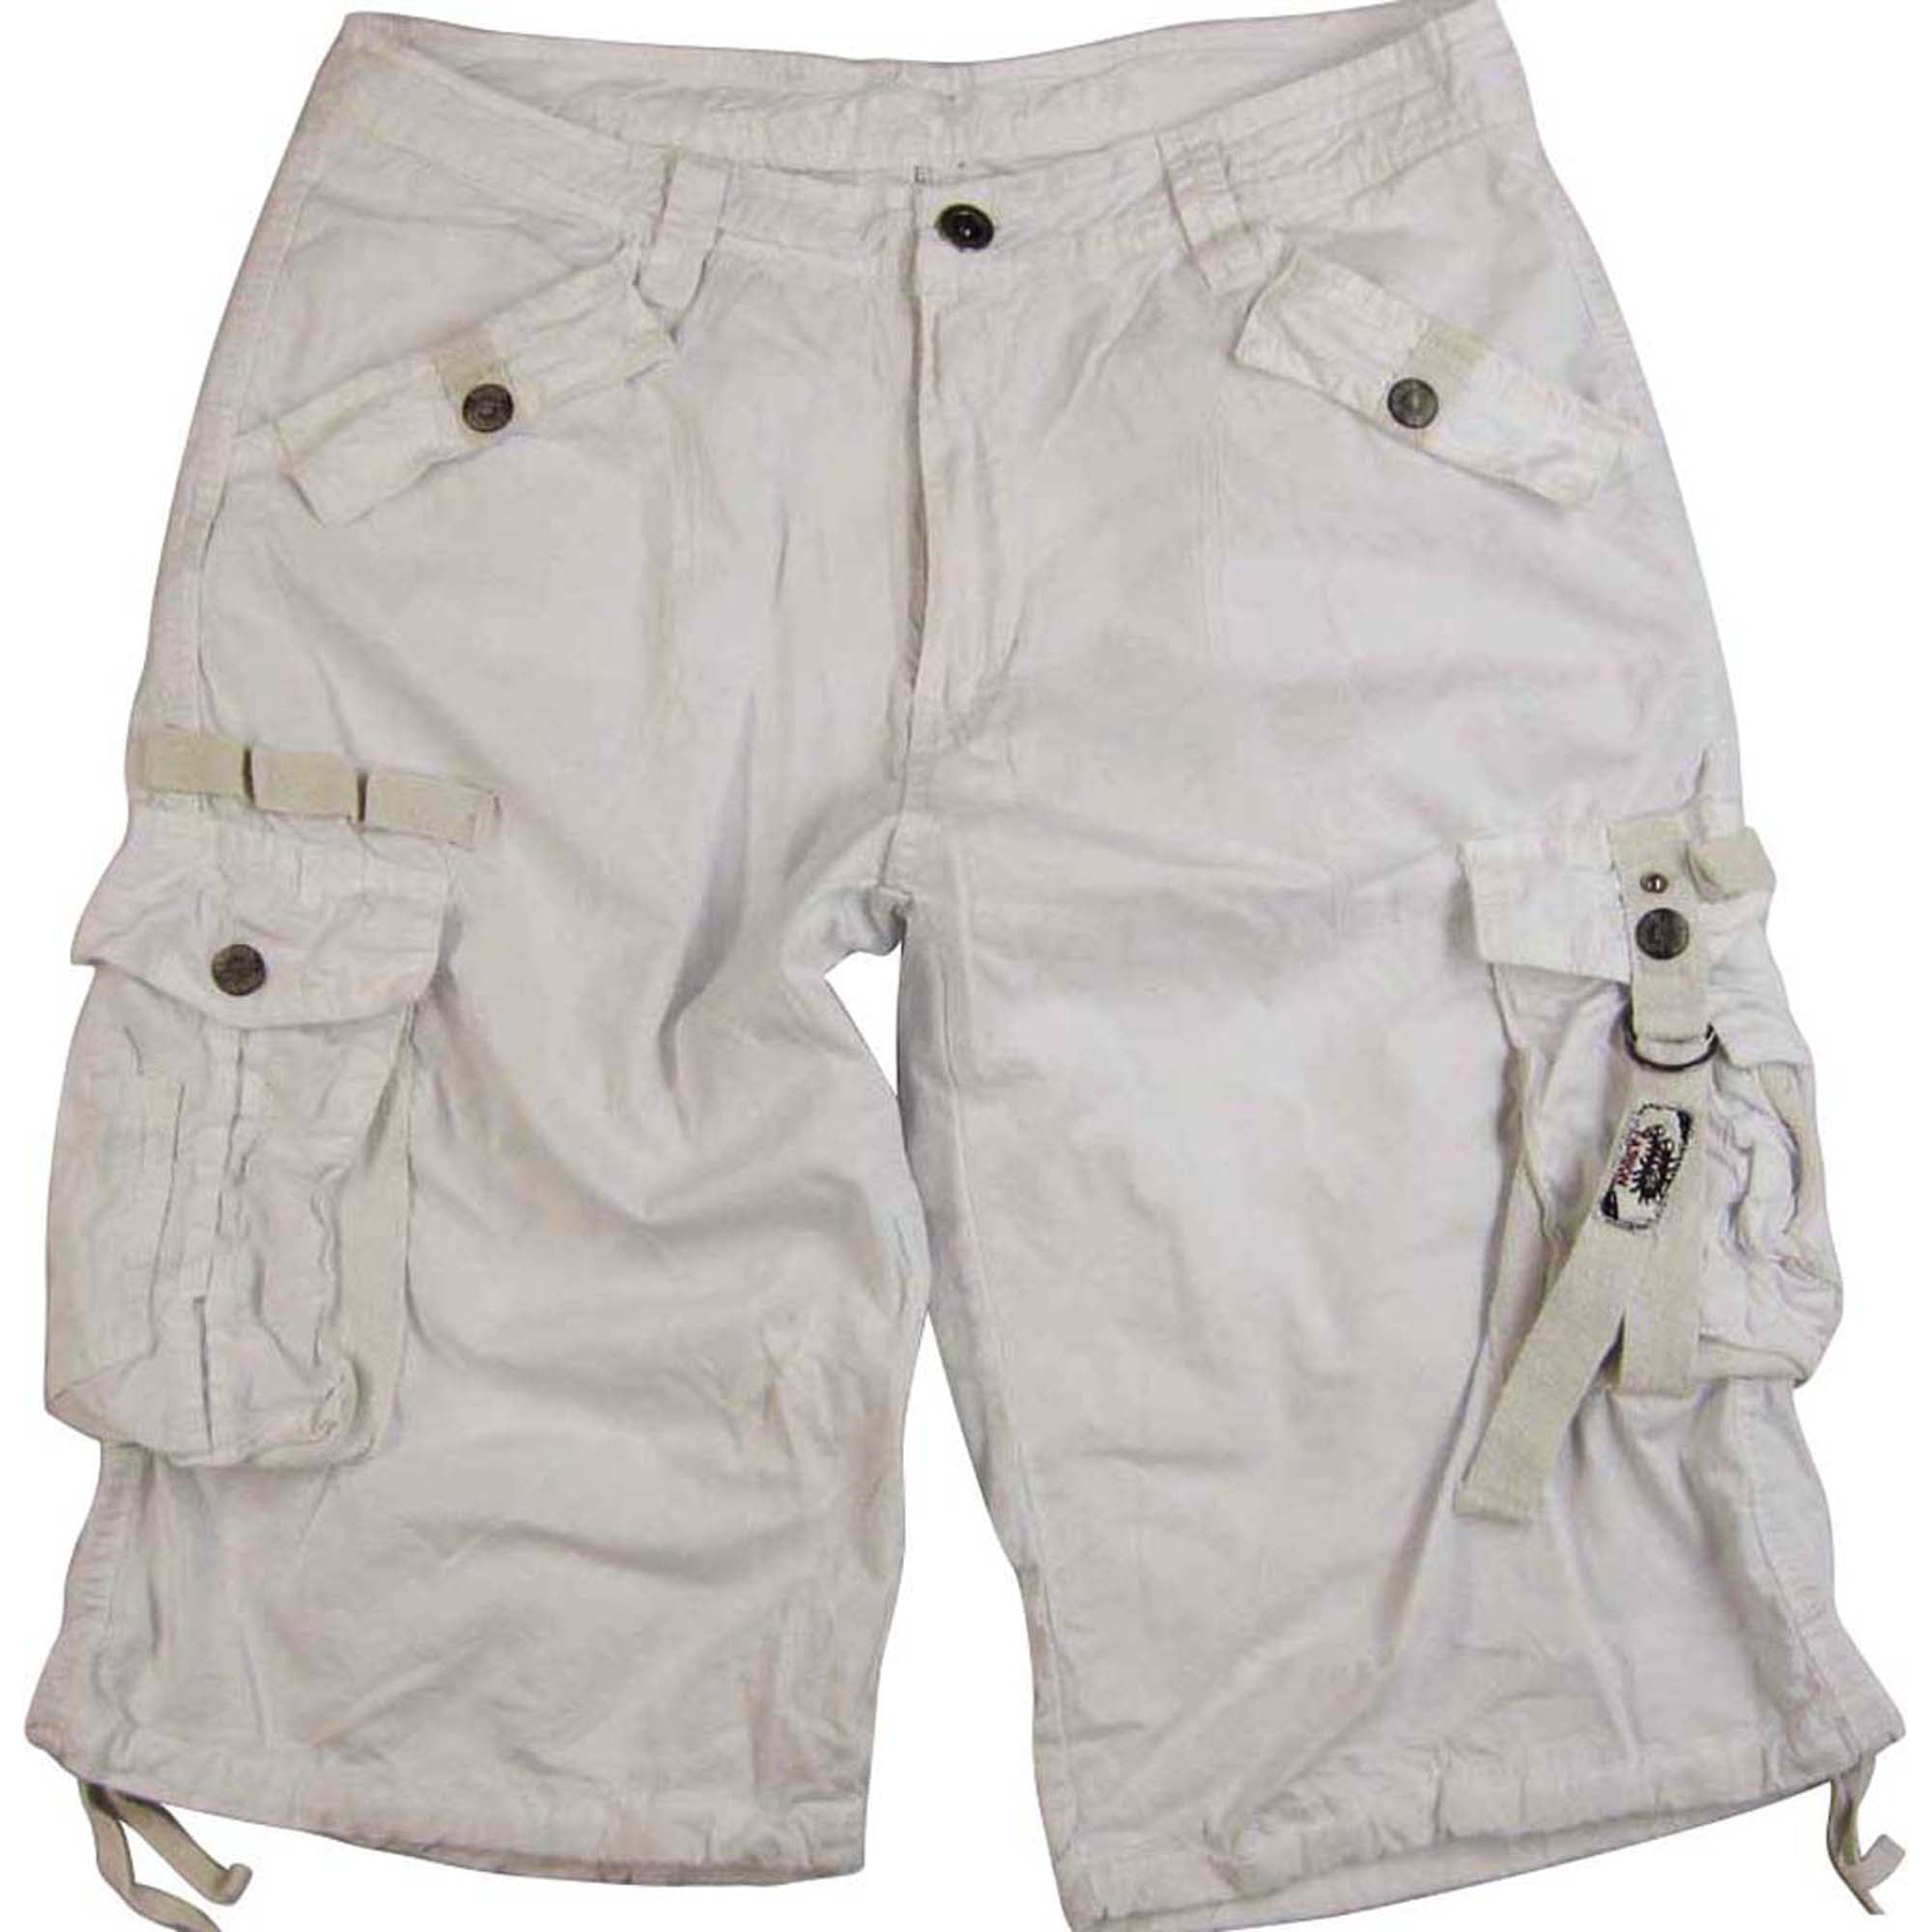 Mens Military White Cargo Shorts #1104 Size 30 - Walmart.com